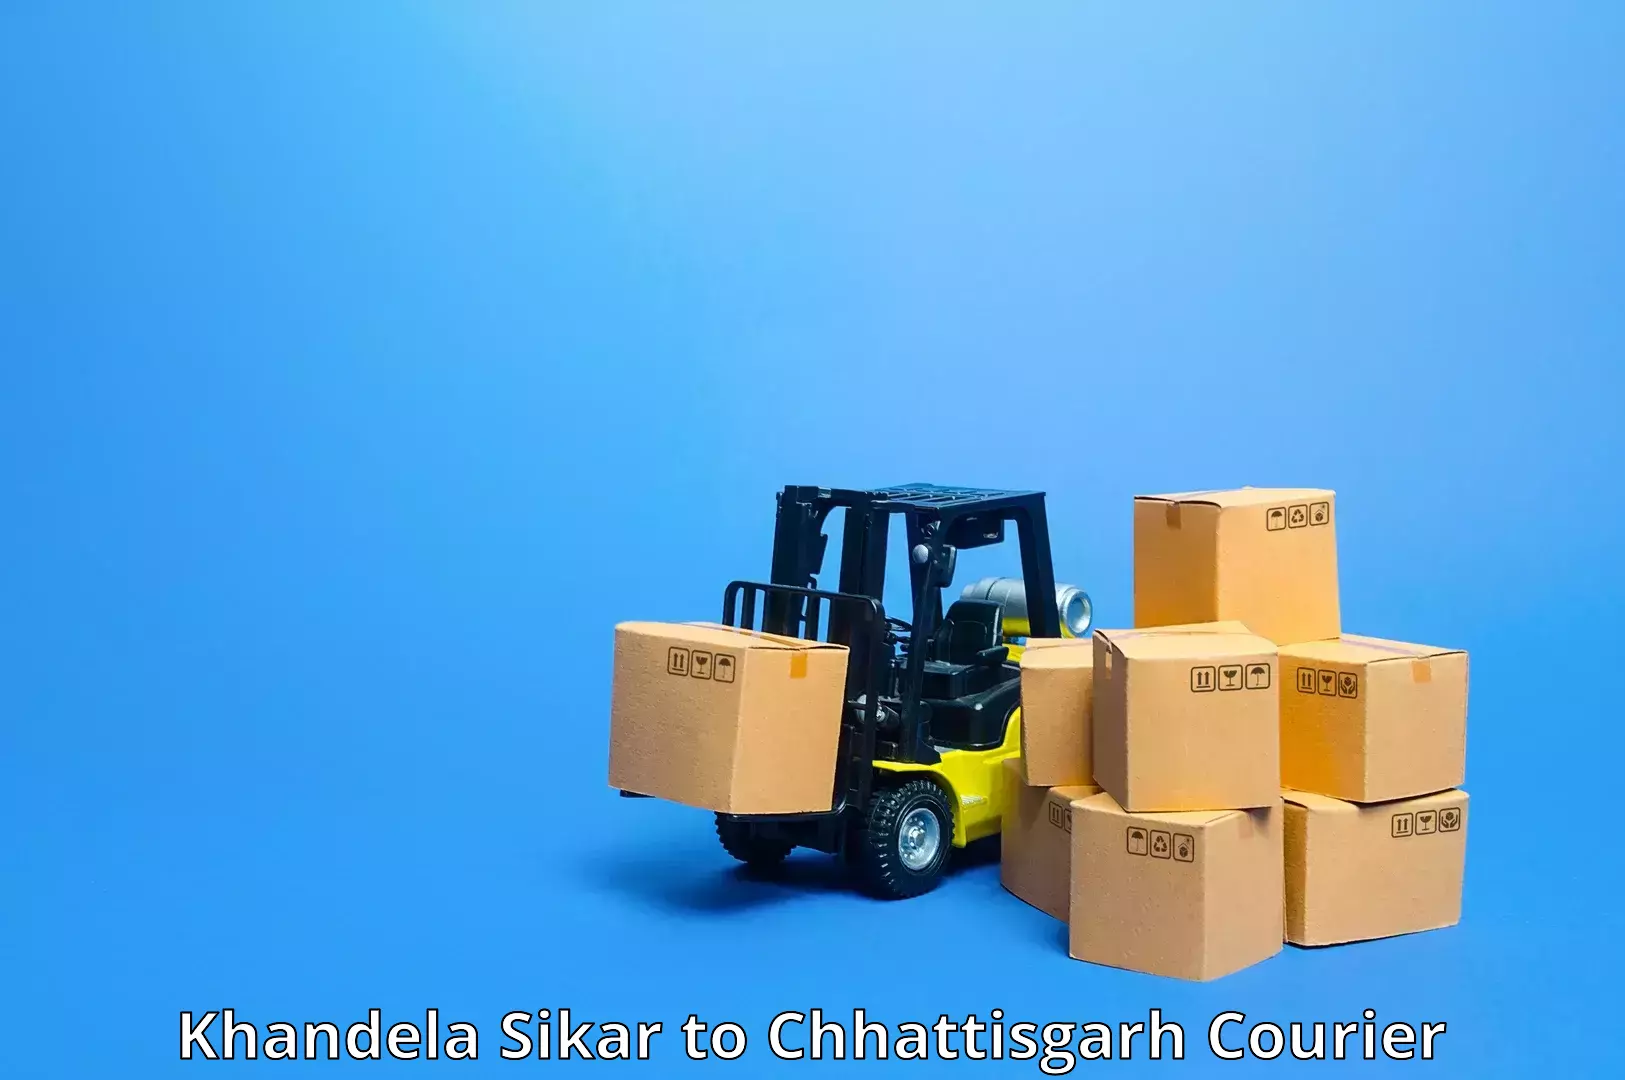 Multi-national courier services Khandela Sikar to Pratappur